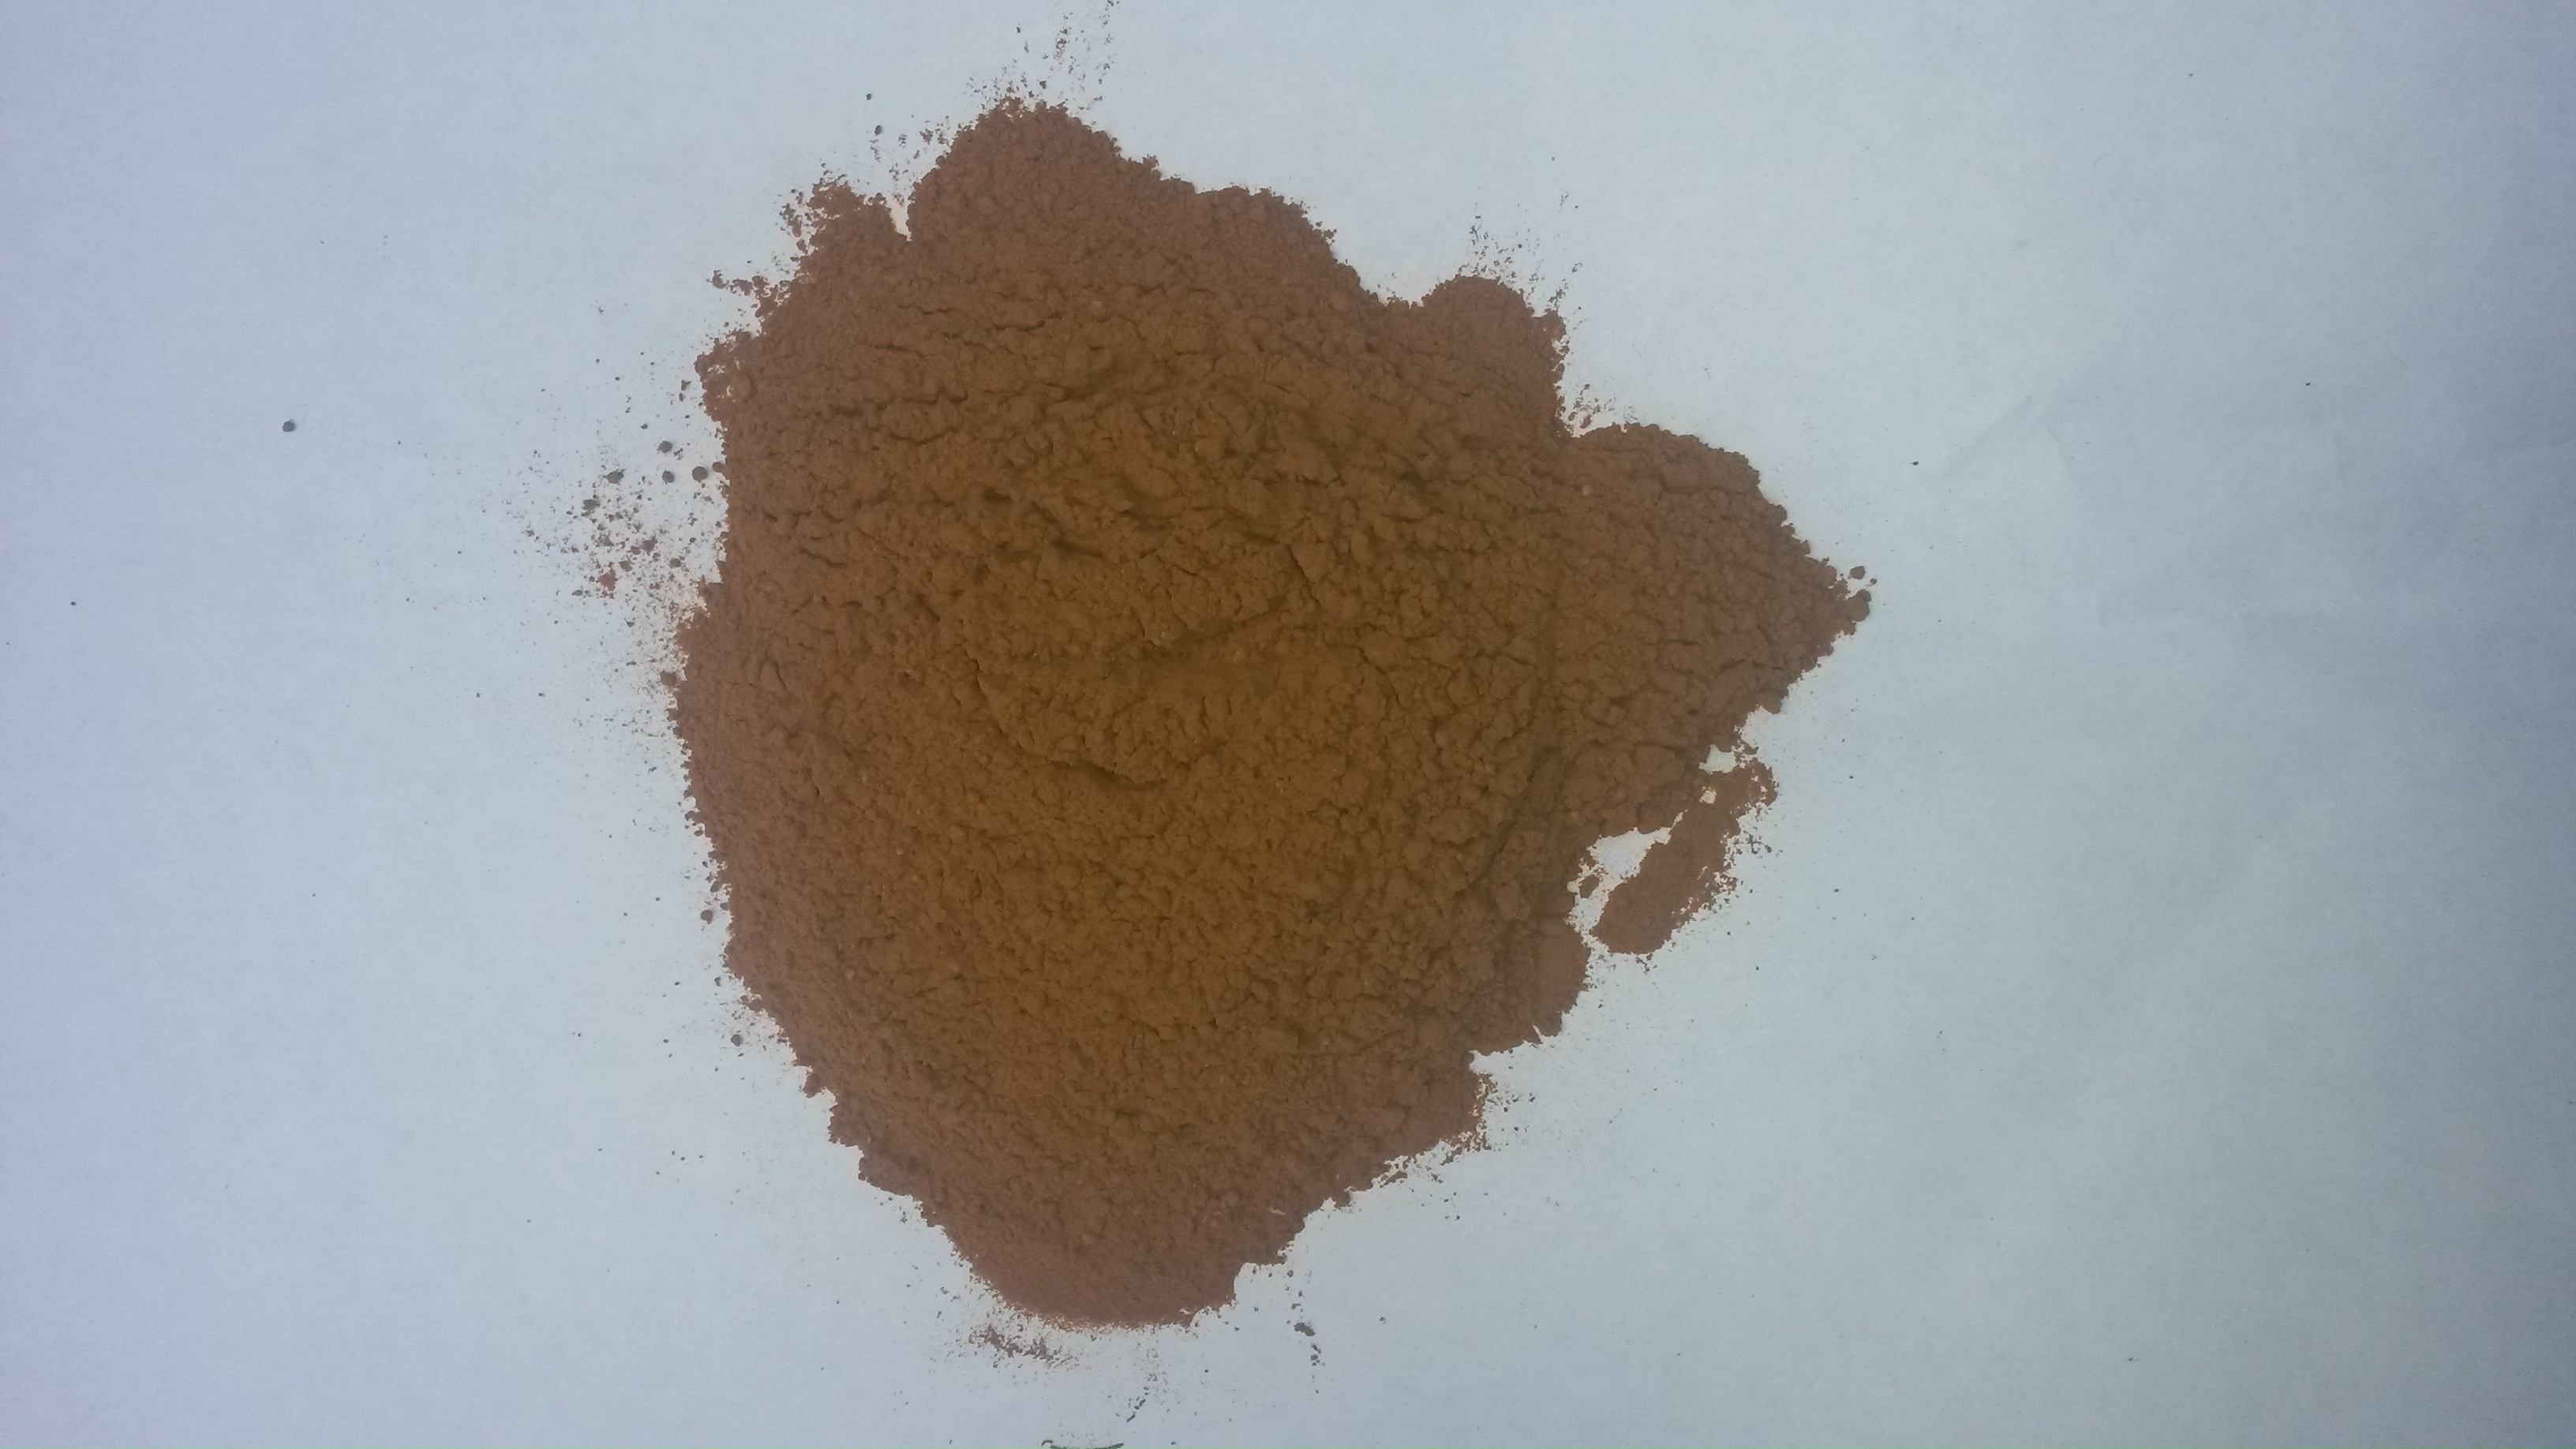 carob powder